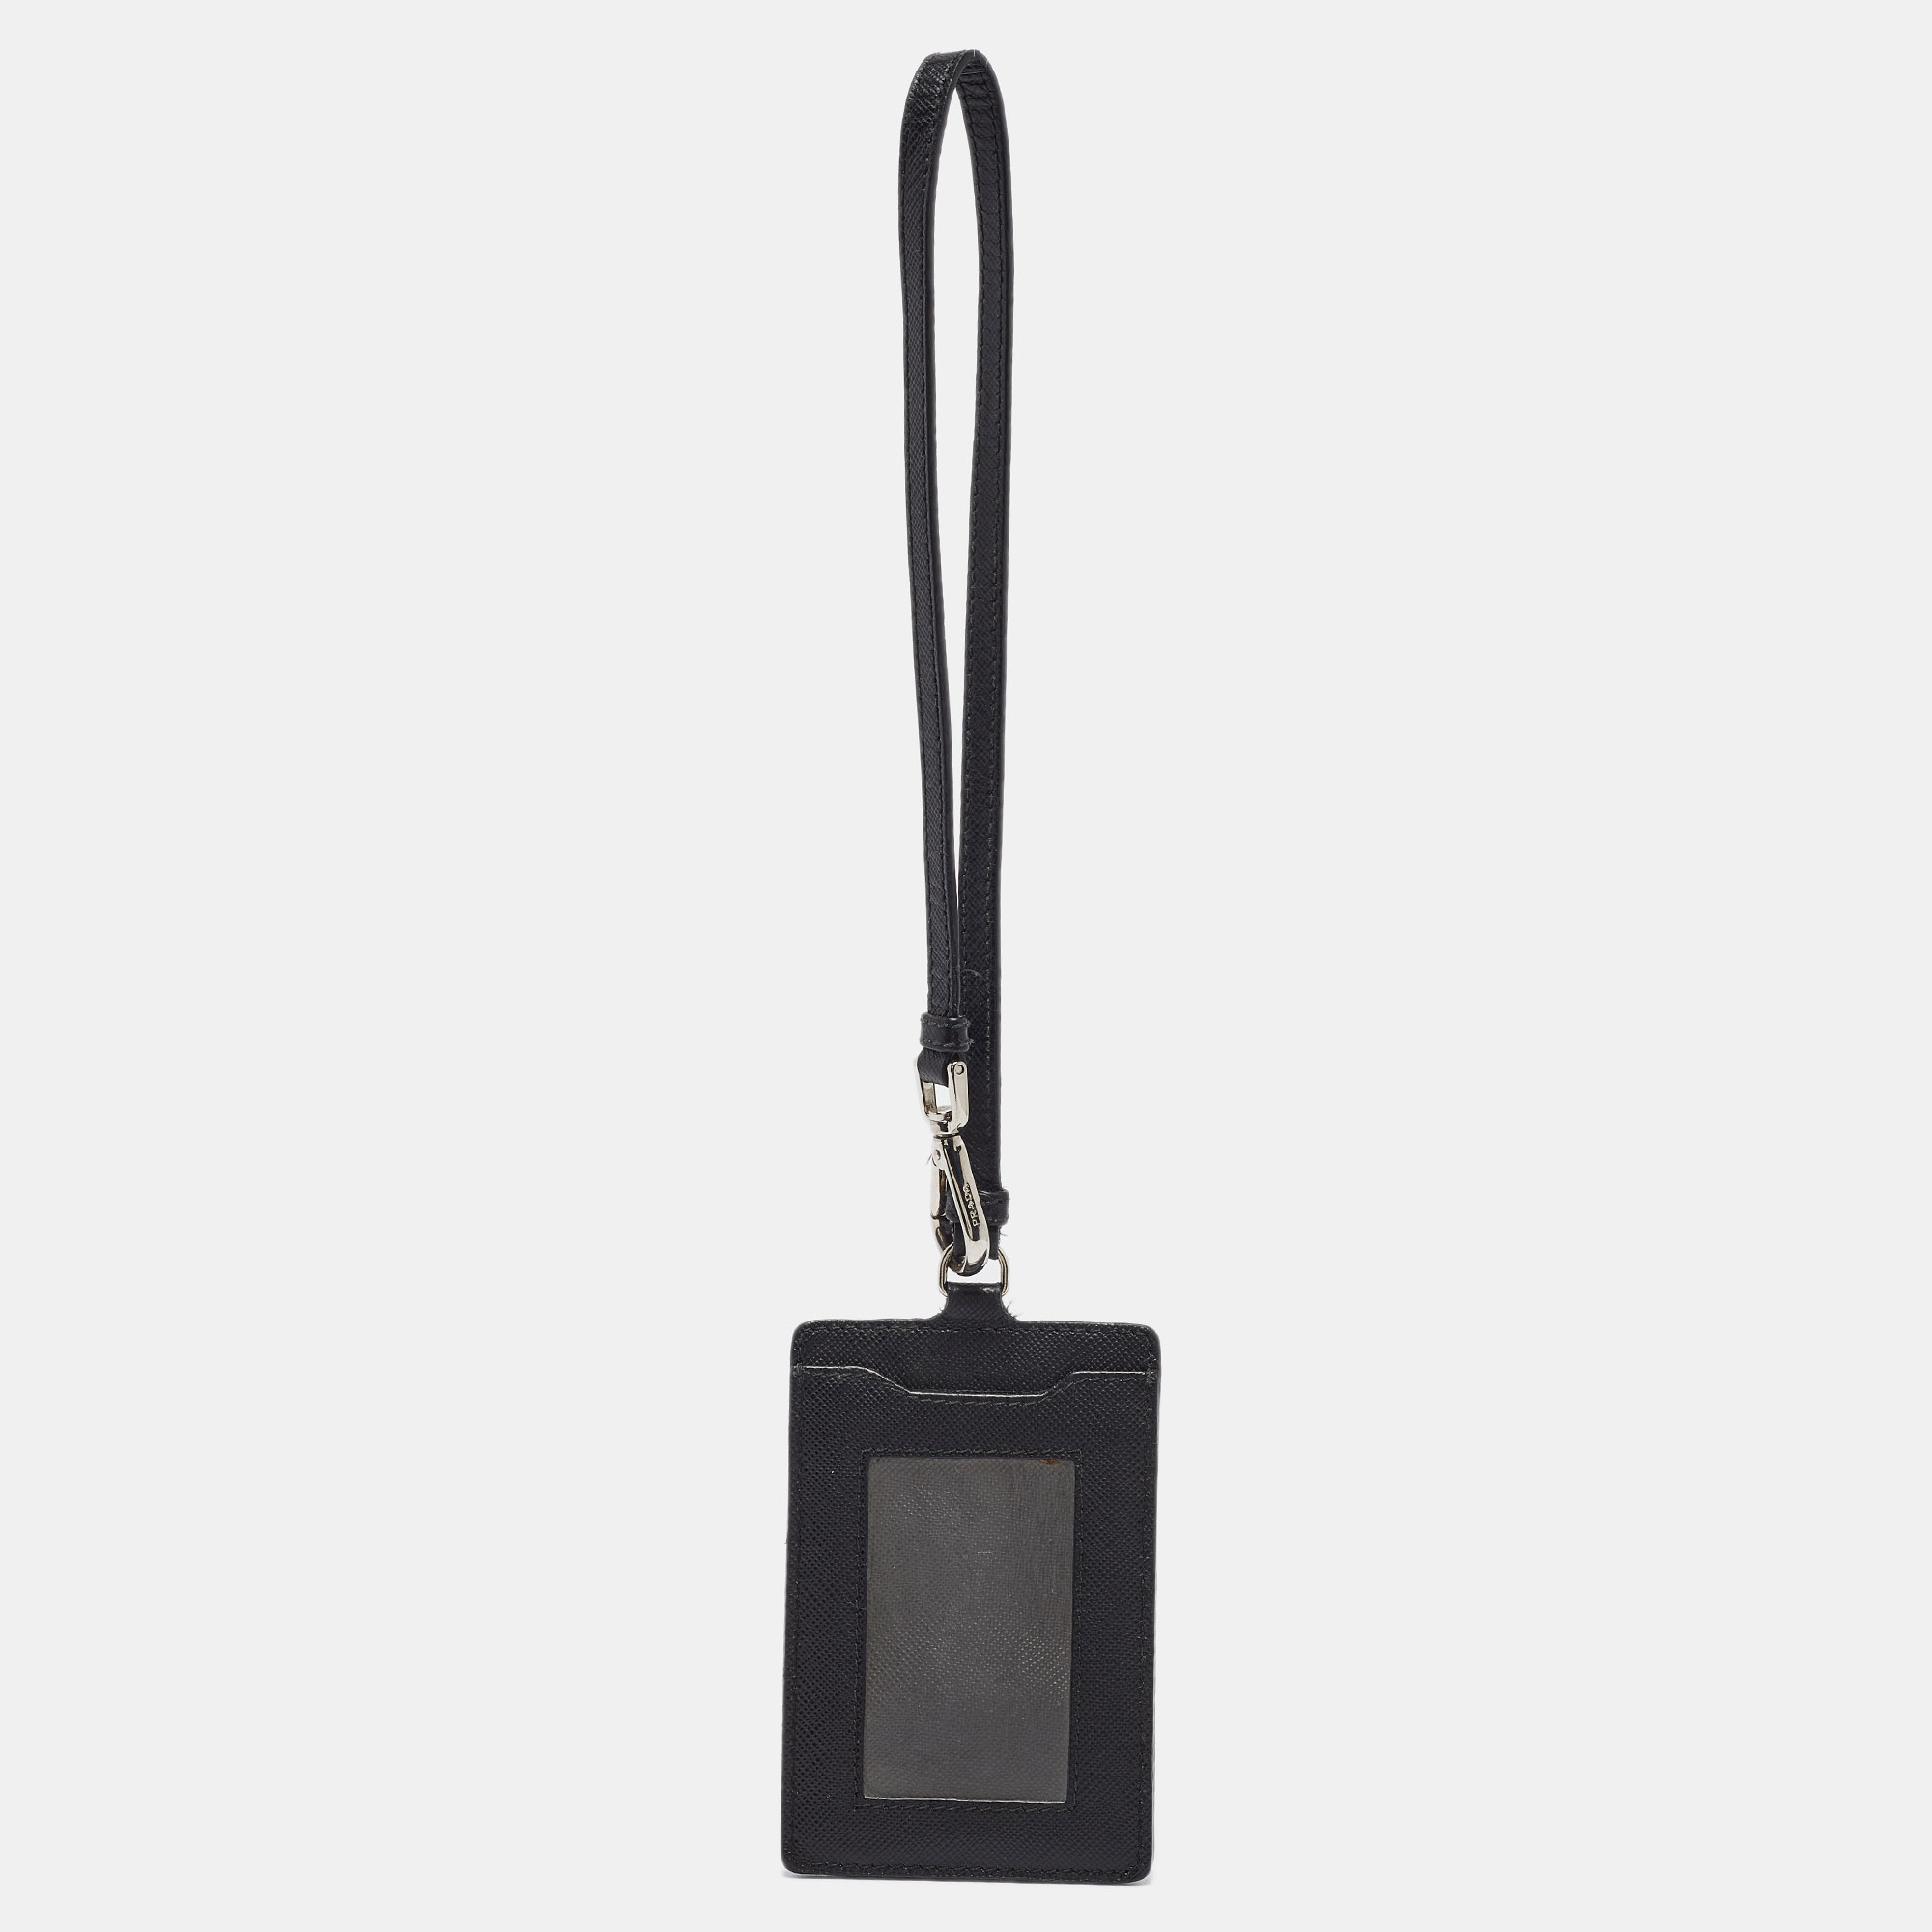 Prada black saffiano leather badge holder